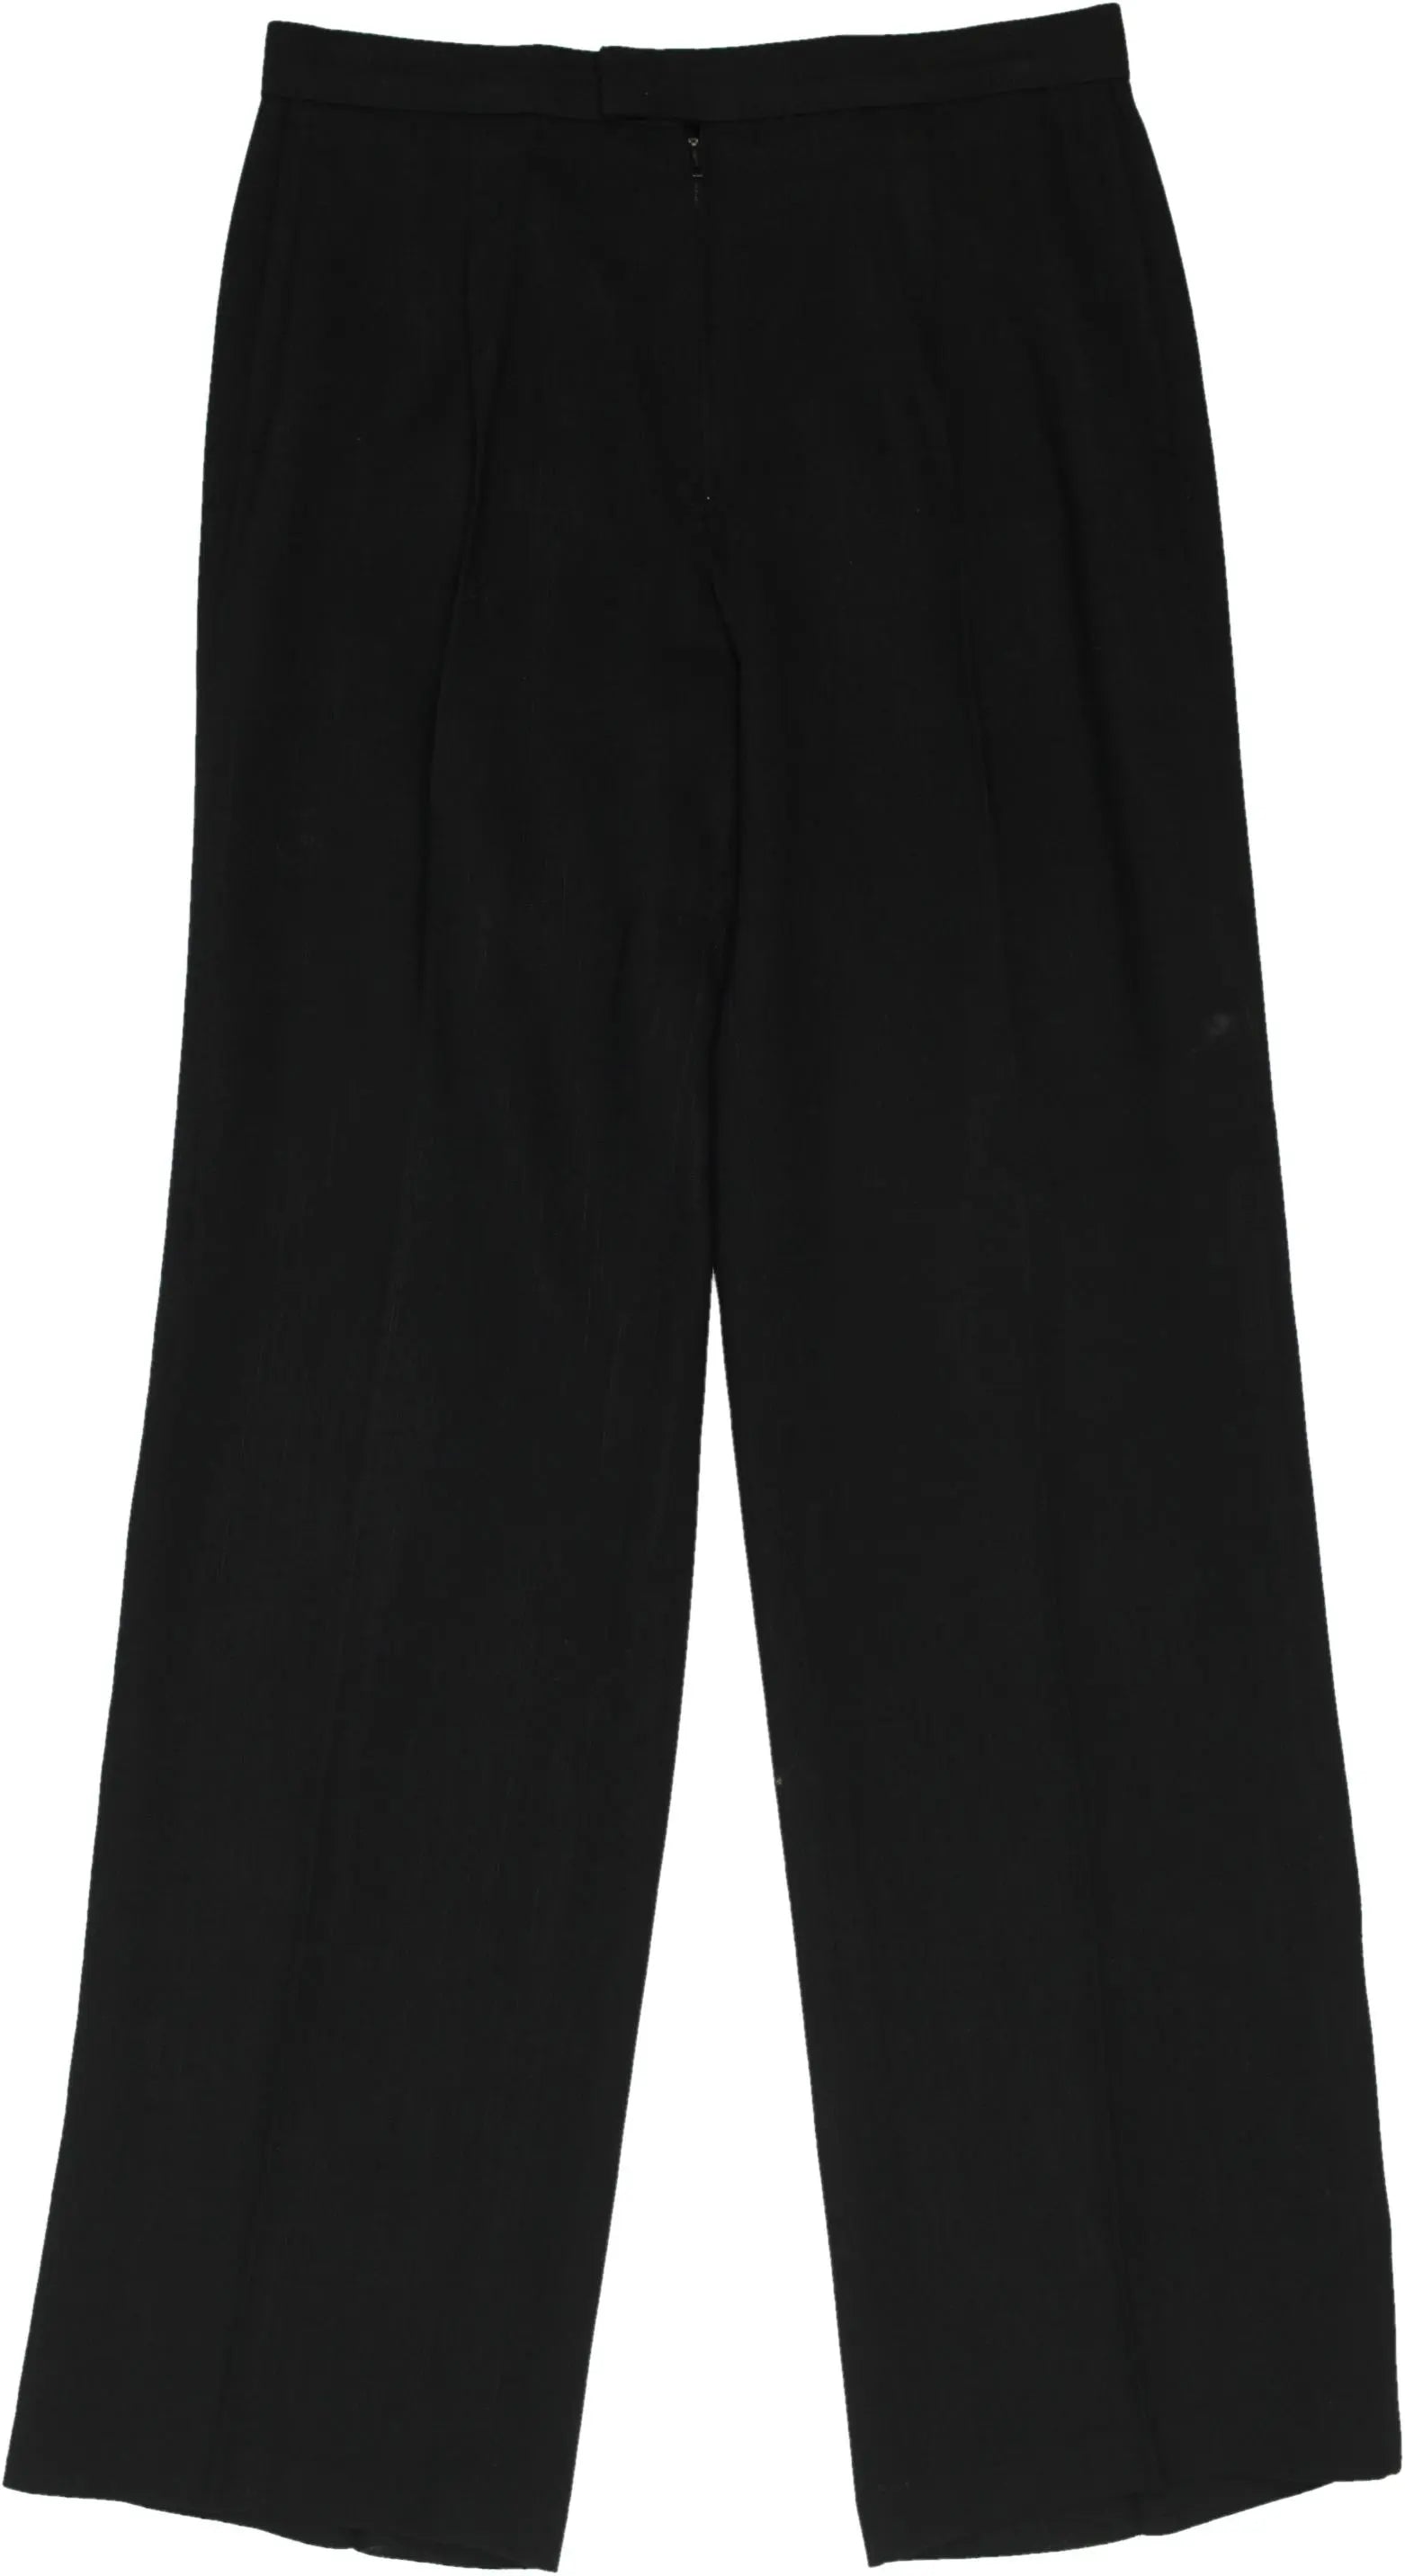 Handmade - Handmade Black Pants- ThriftTale.com - Vintage and second handclothing